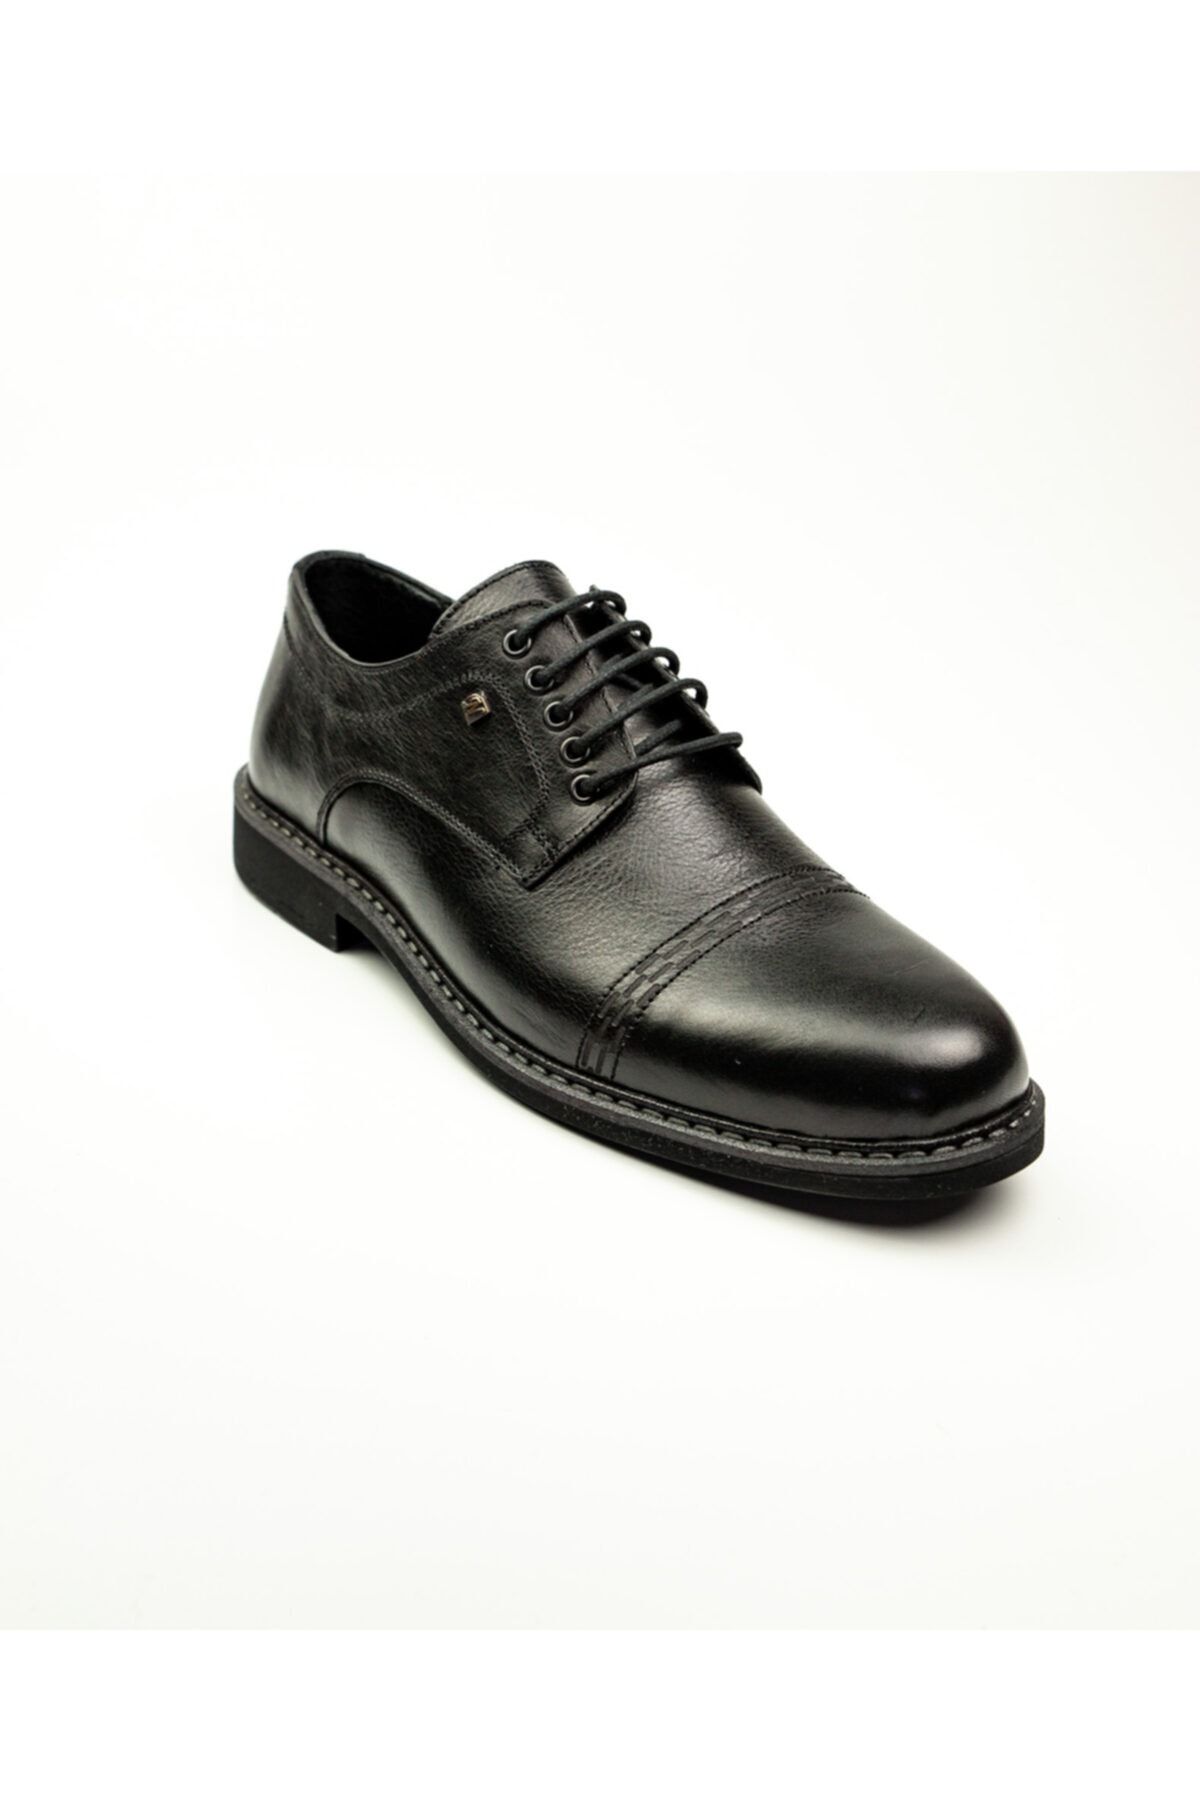 Nobel 959 Siyah Deri Klasik Erkek Ayakkabı Siyah-42